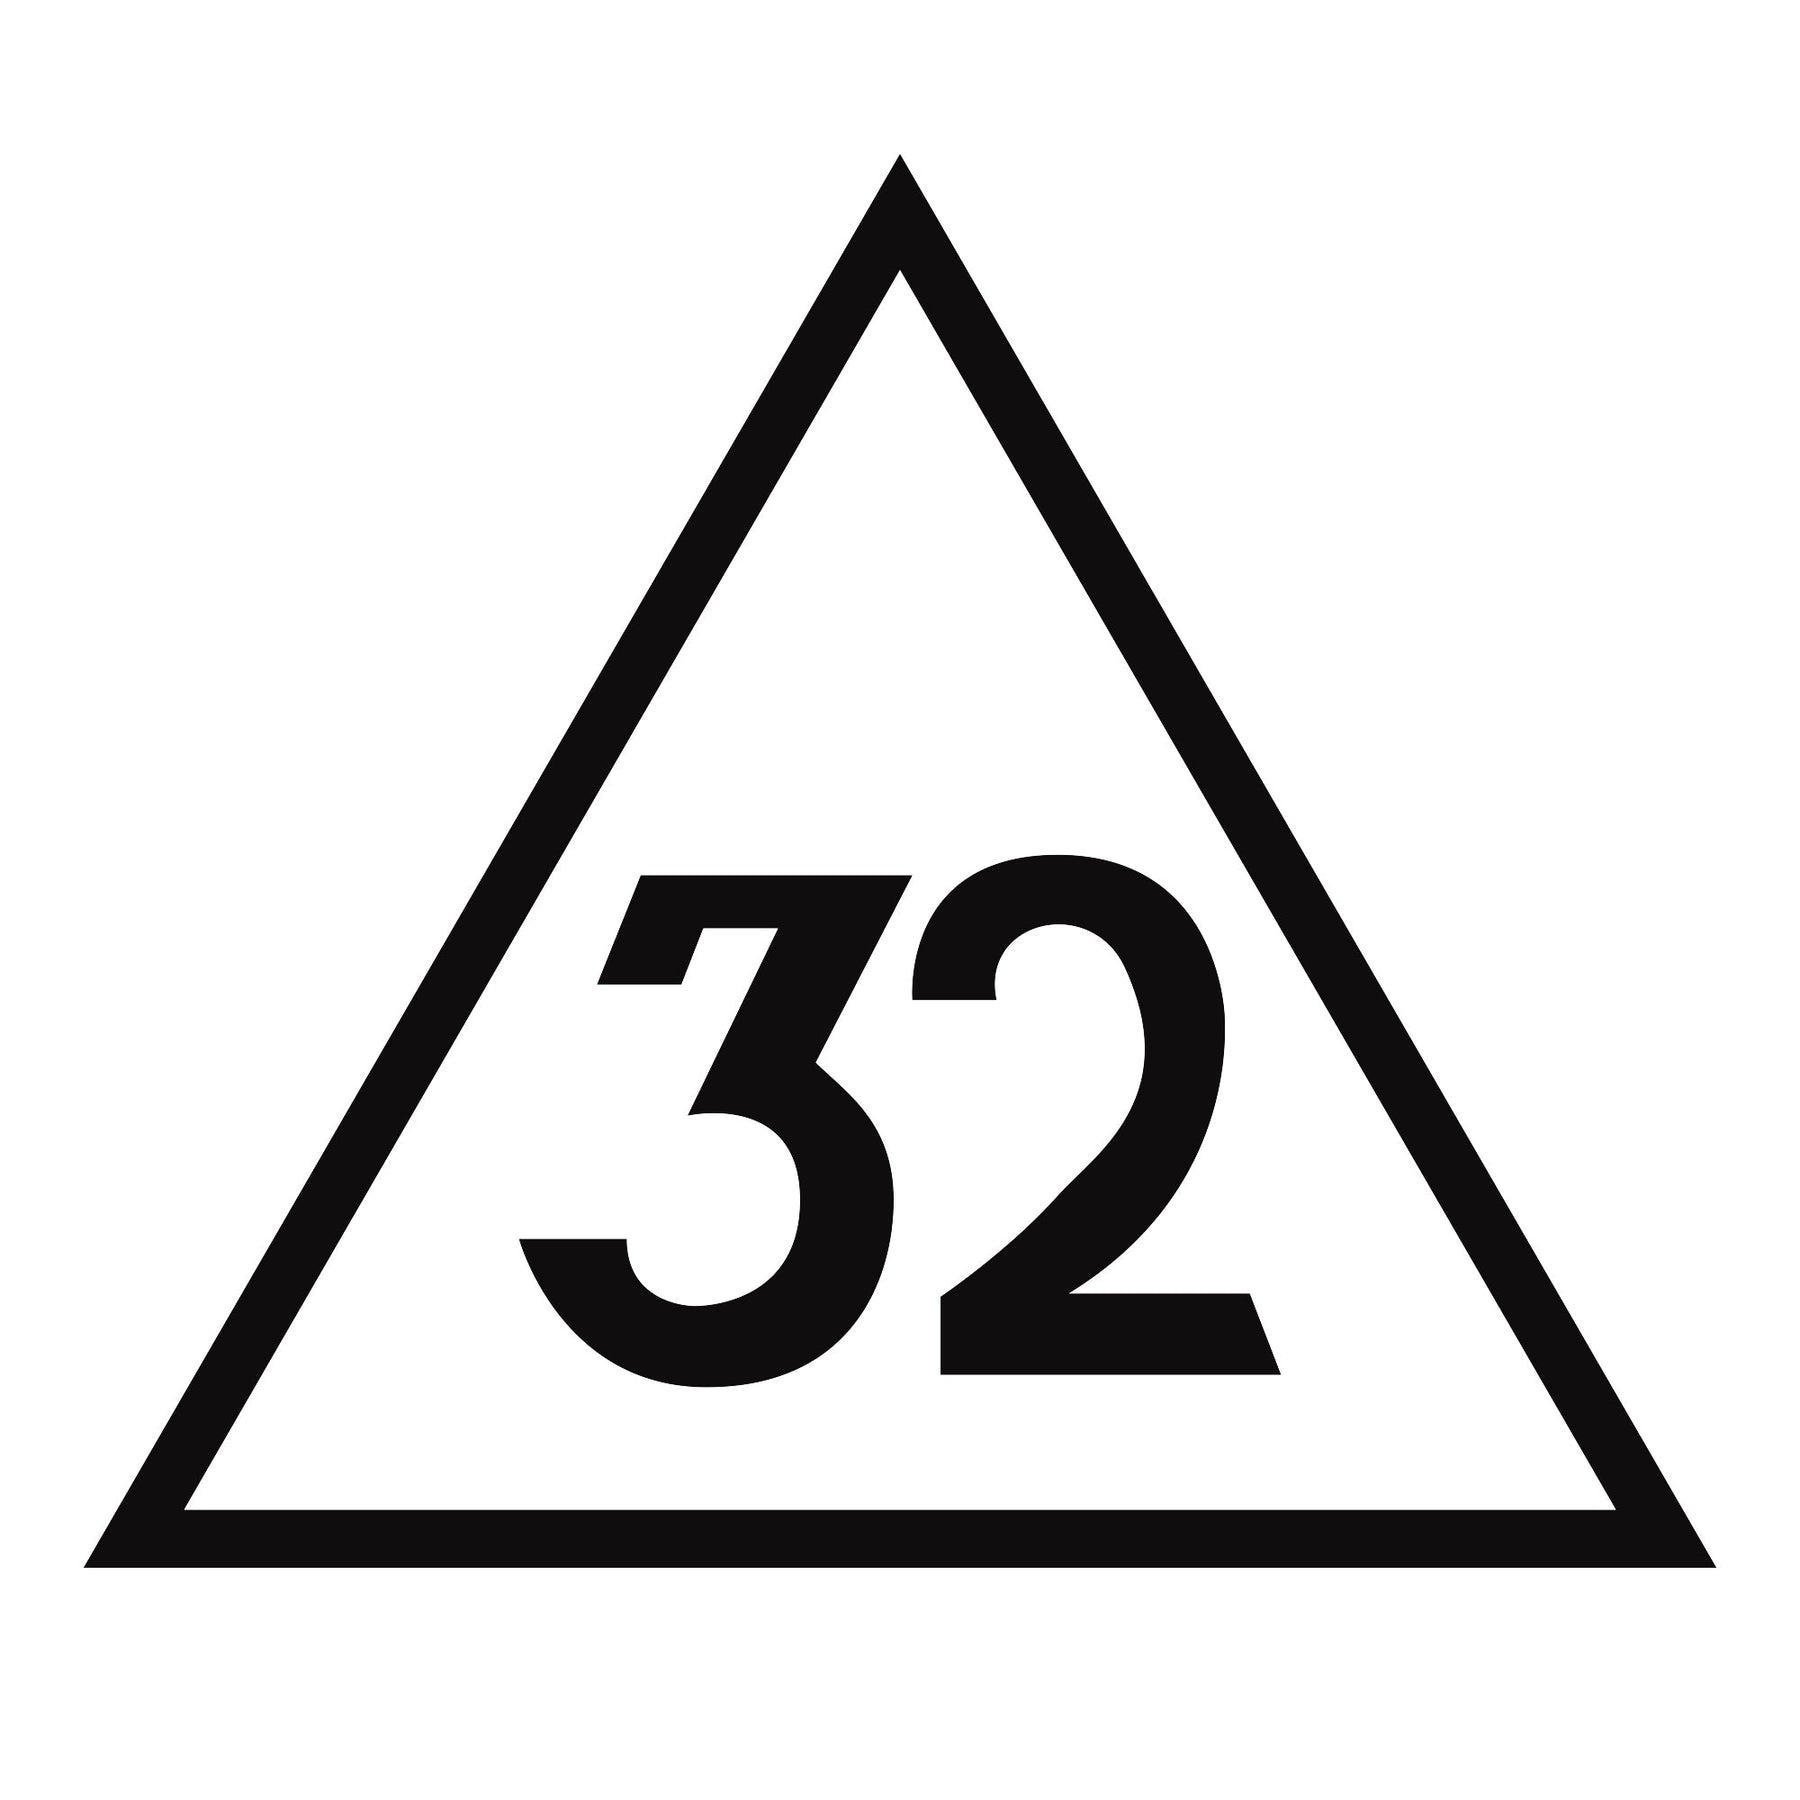 32nd Degree Scottish Rite Business Card Holder - Leather - Bricks Masons